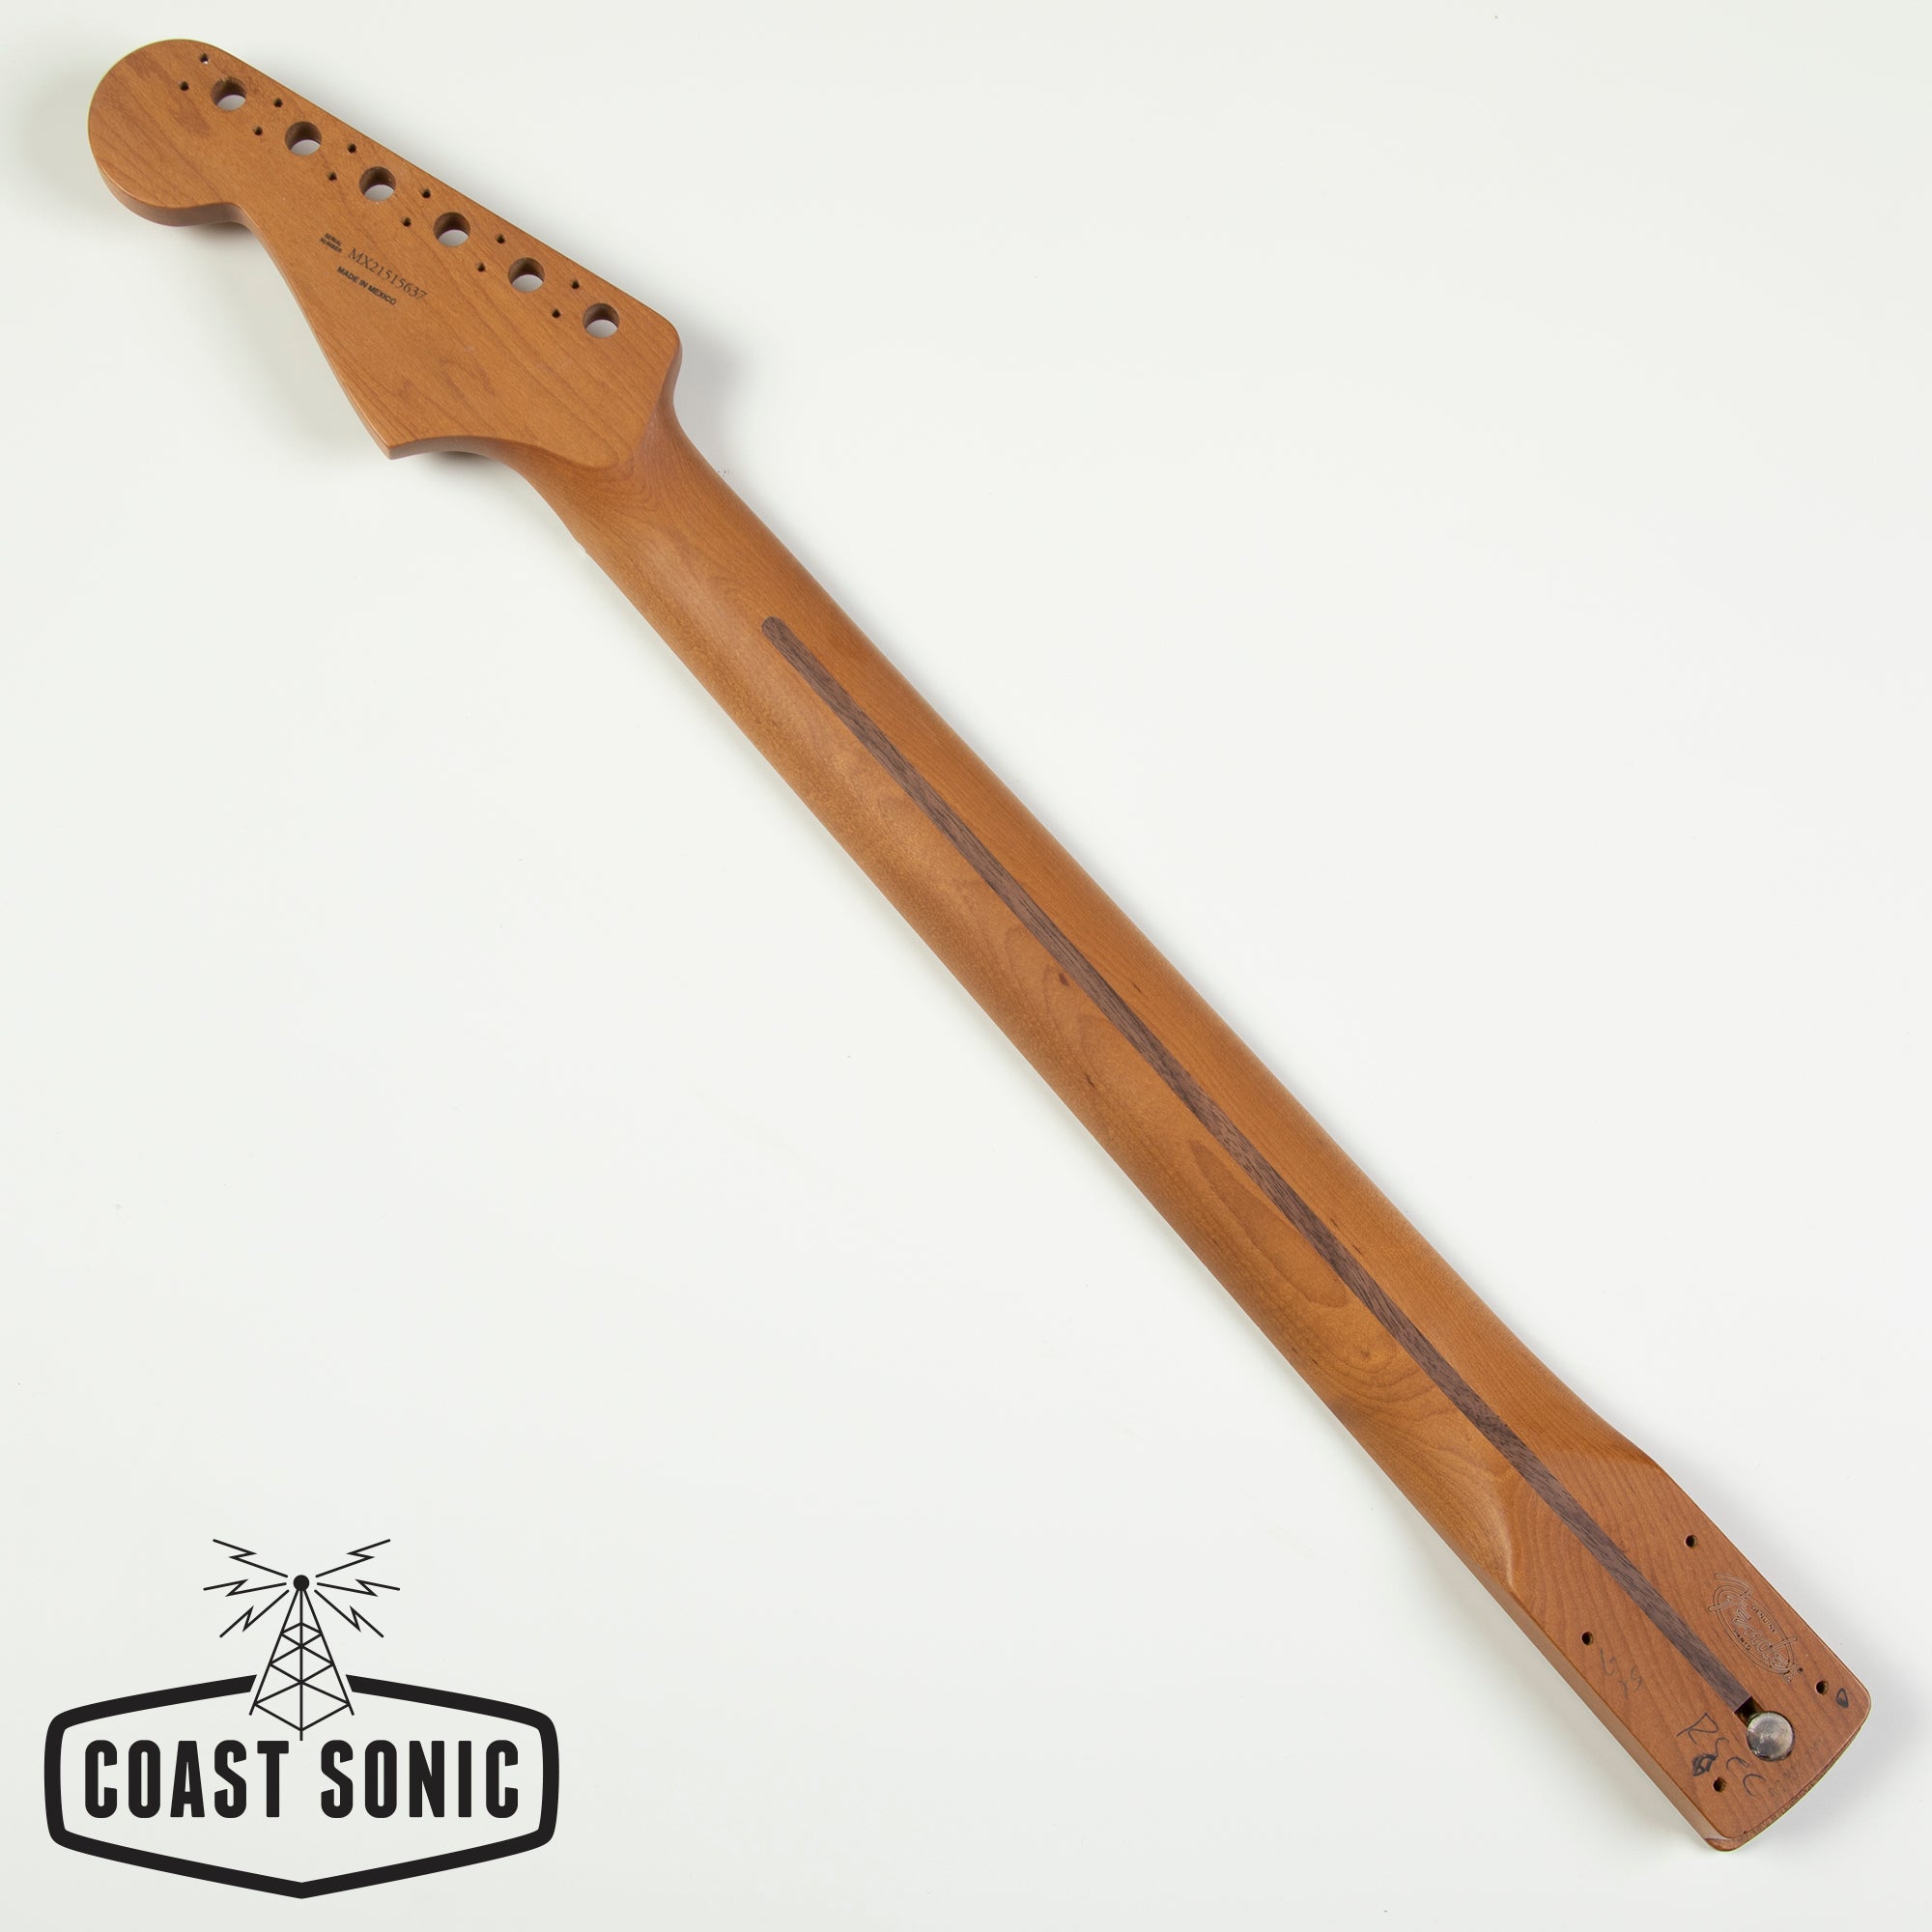 Fender Roasted Maple Stratocaster Neck- Flat Oval